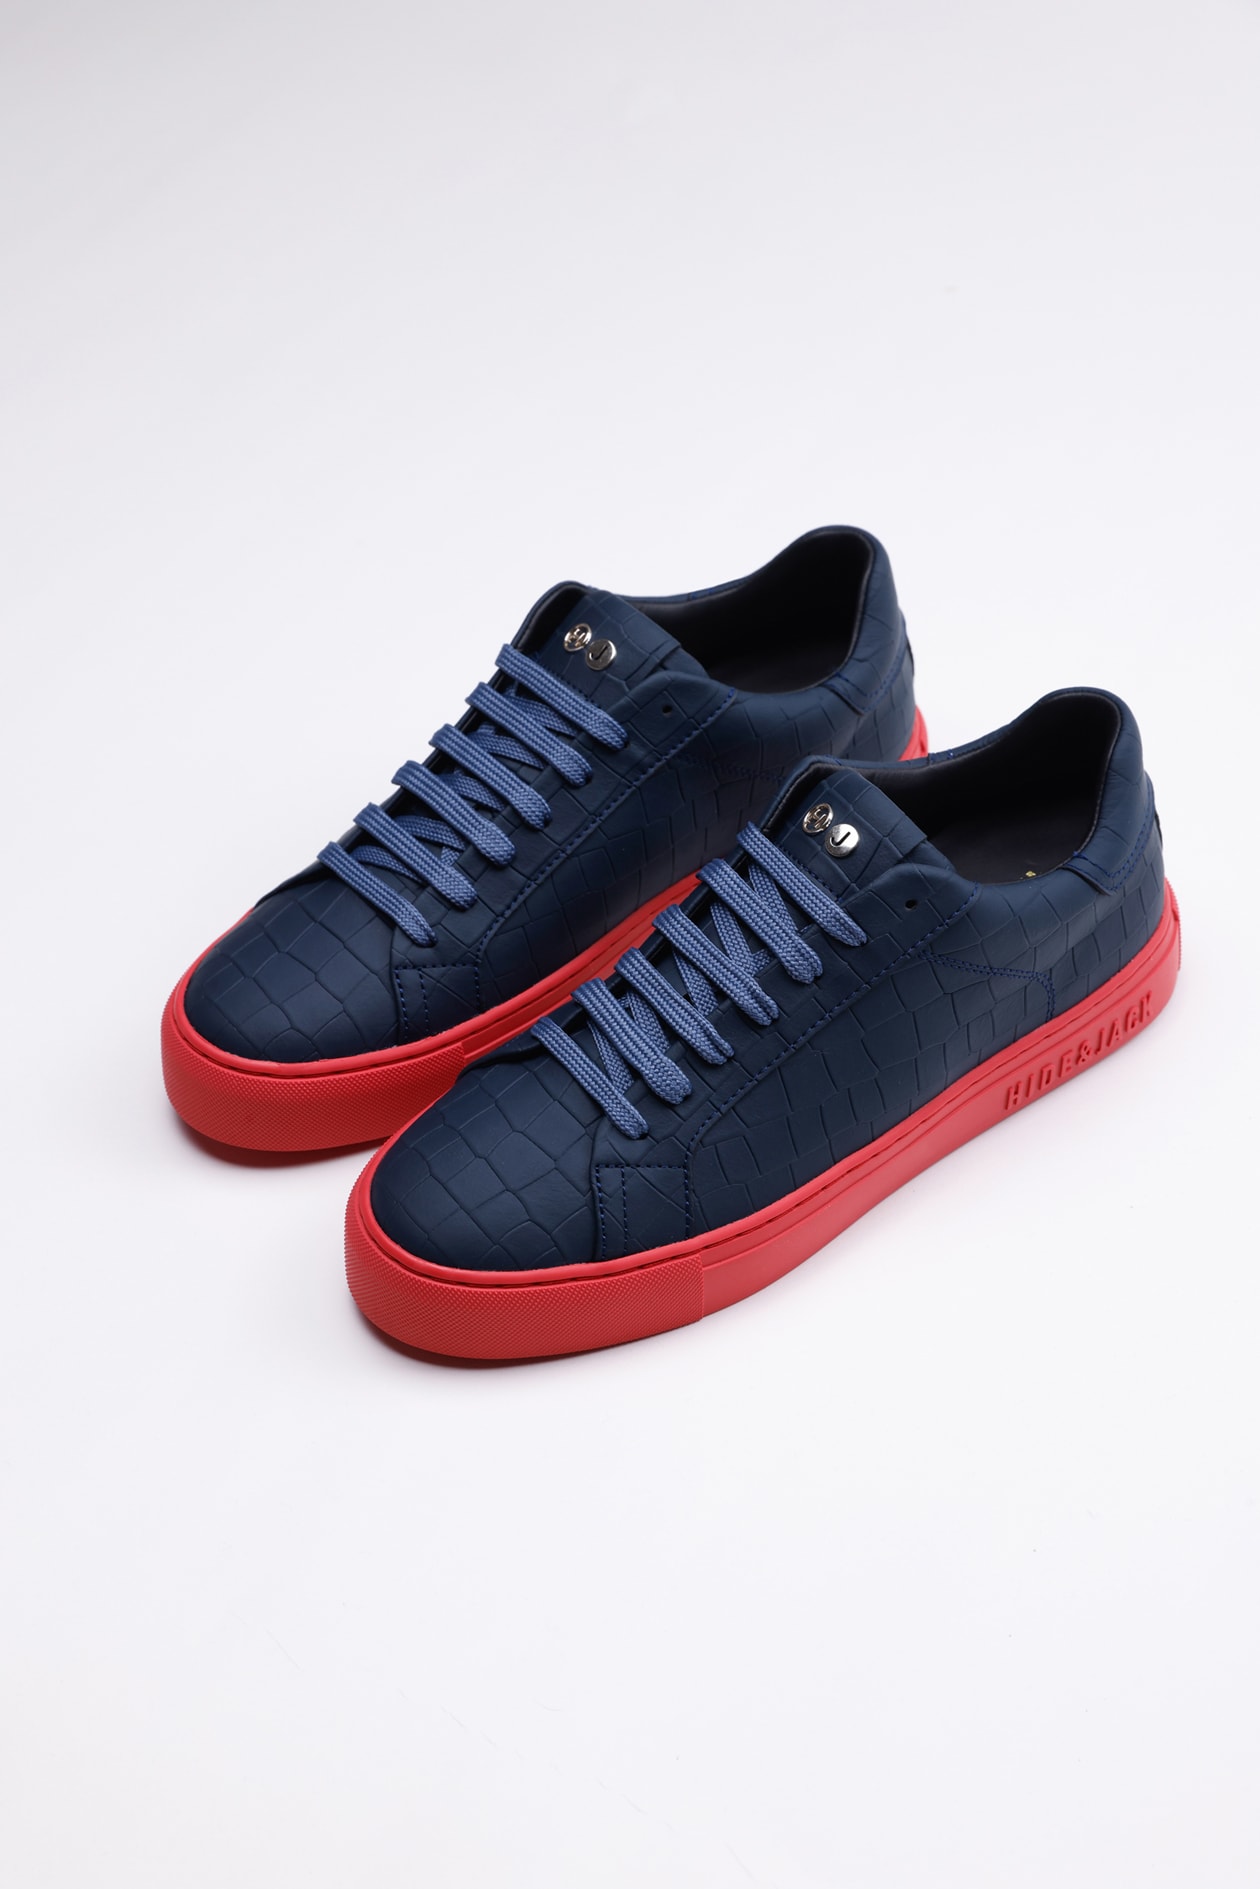 Hide&amp;jack Low Top Sneaker - Essence Blue Red